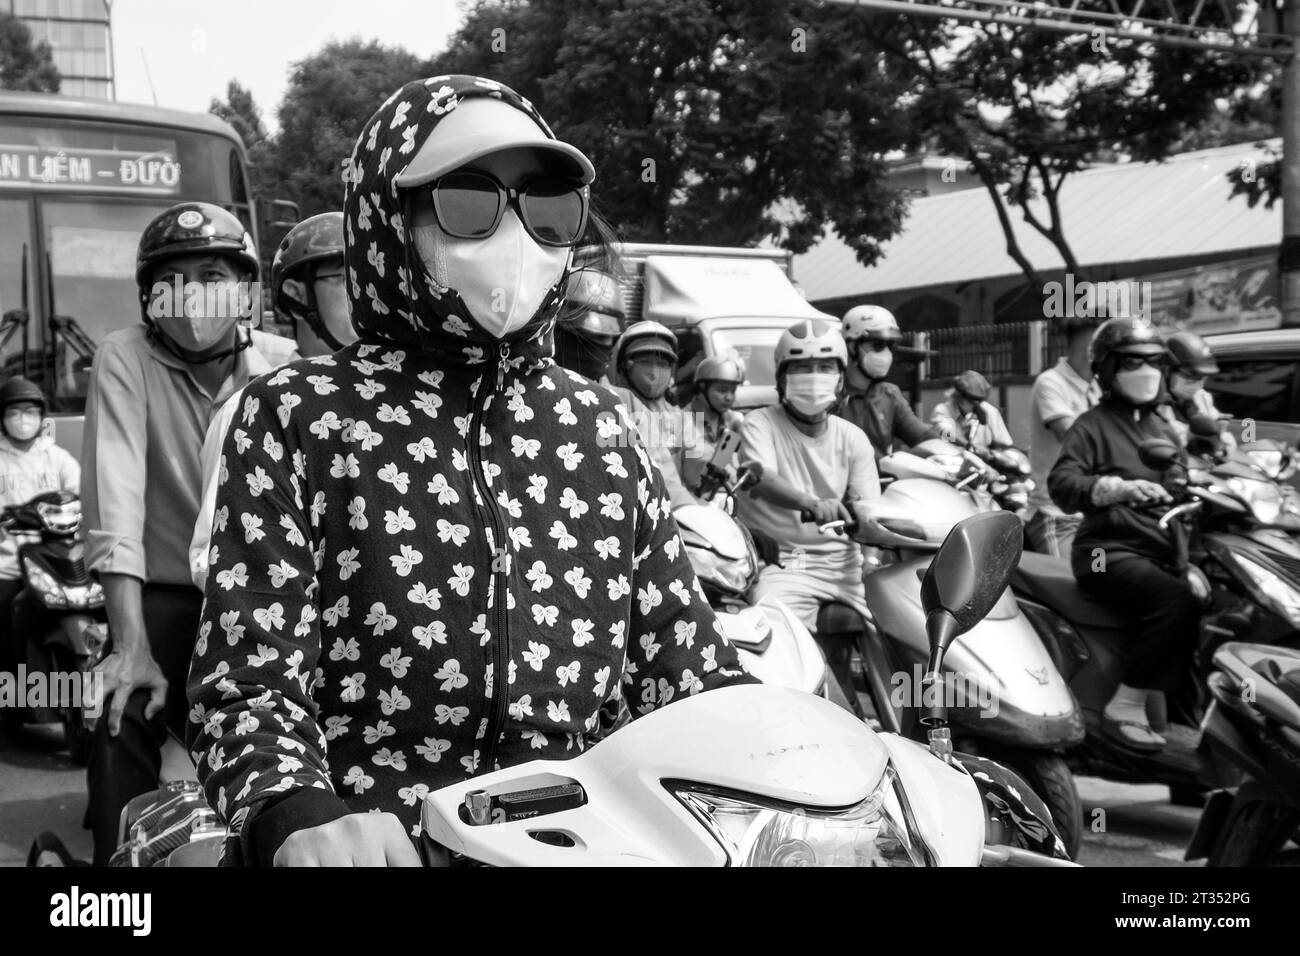 Vietnam, Ho Chi Minh City, Saigon, motorcycle traffic Stock Photo